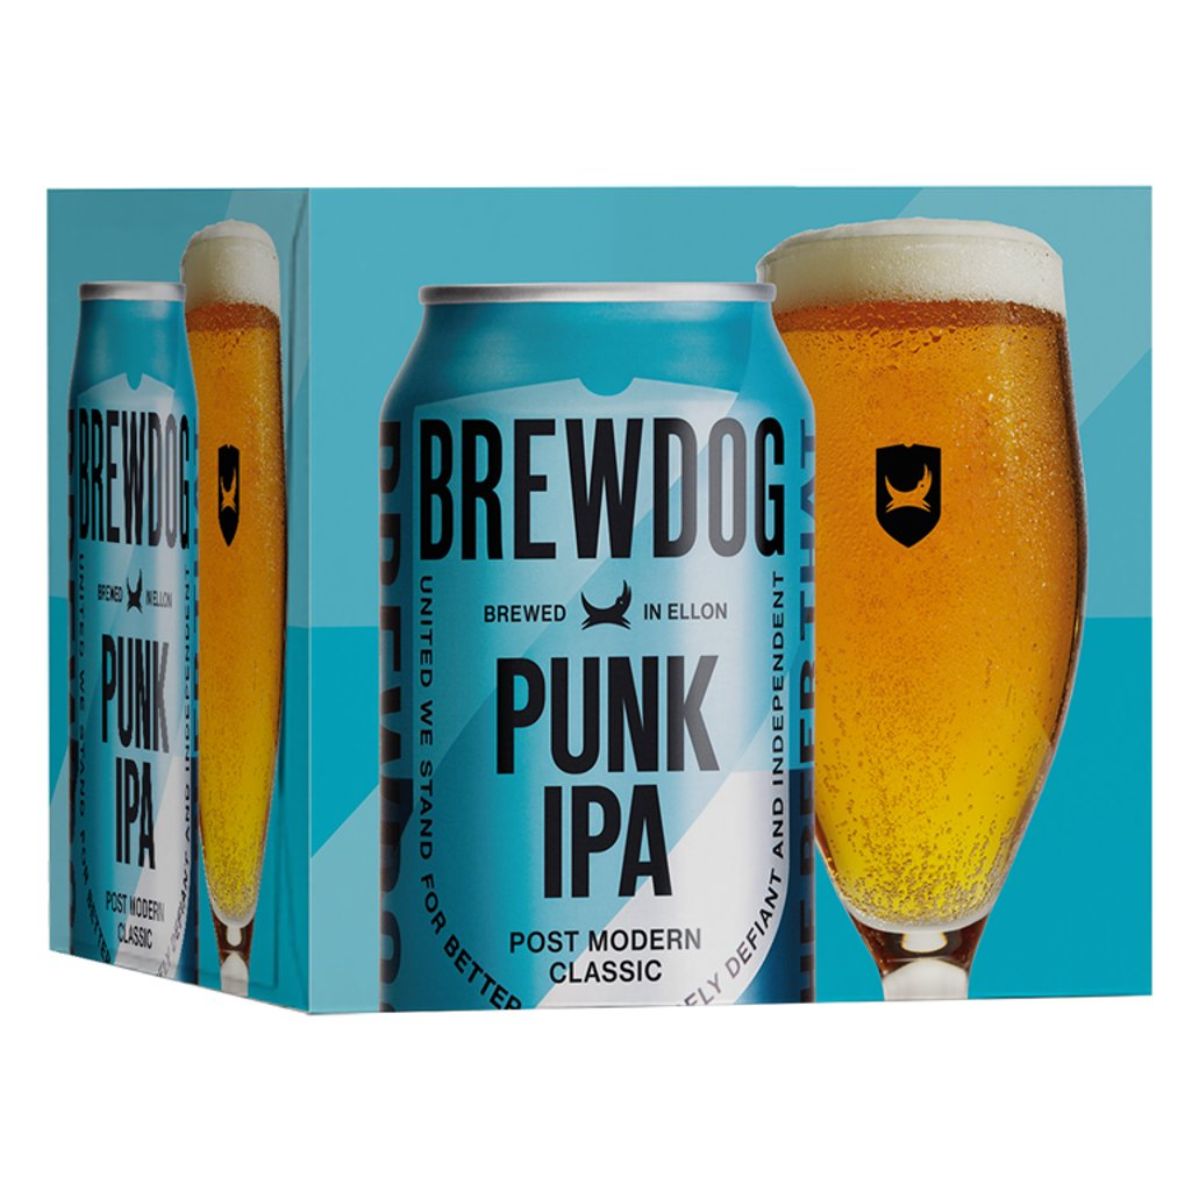 BrewDog - Punk IPA Post Modern Classic (5.4% ABV) - 4 x 330ml pack.